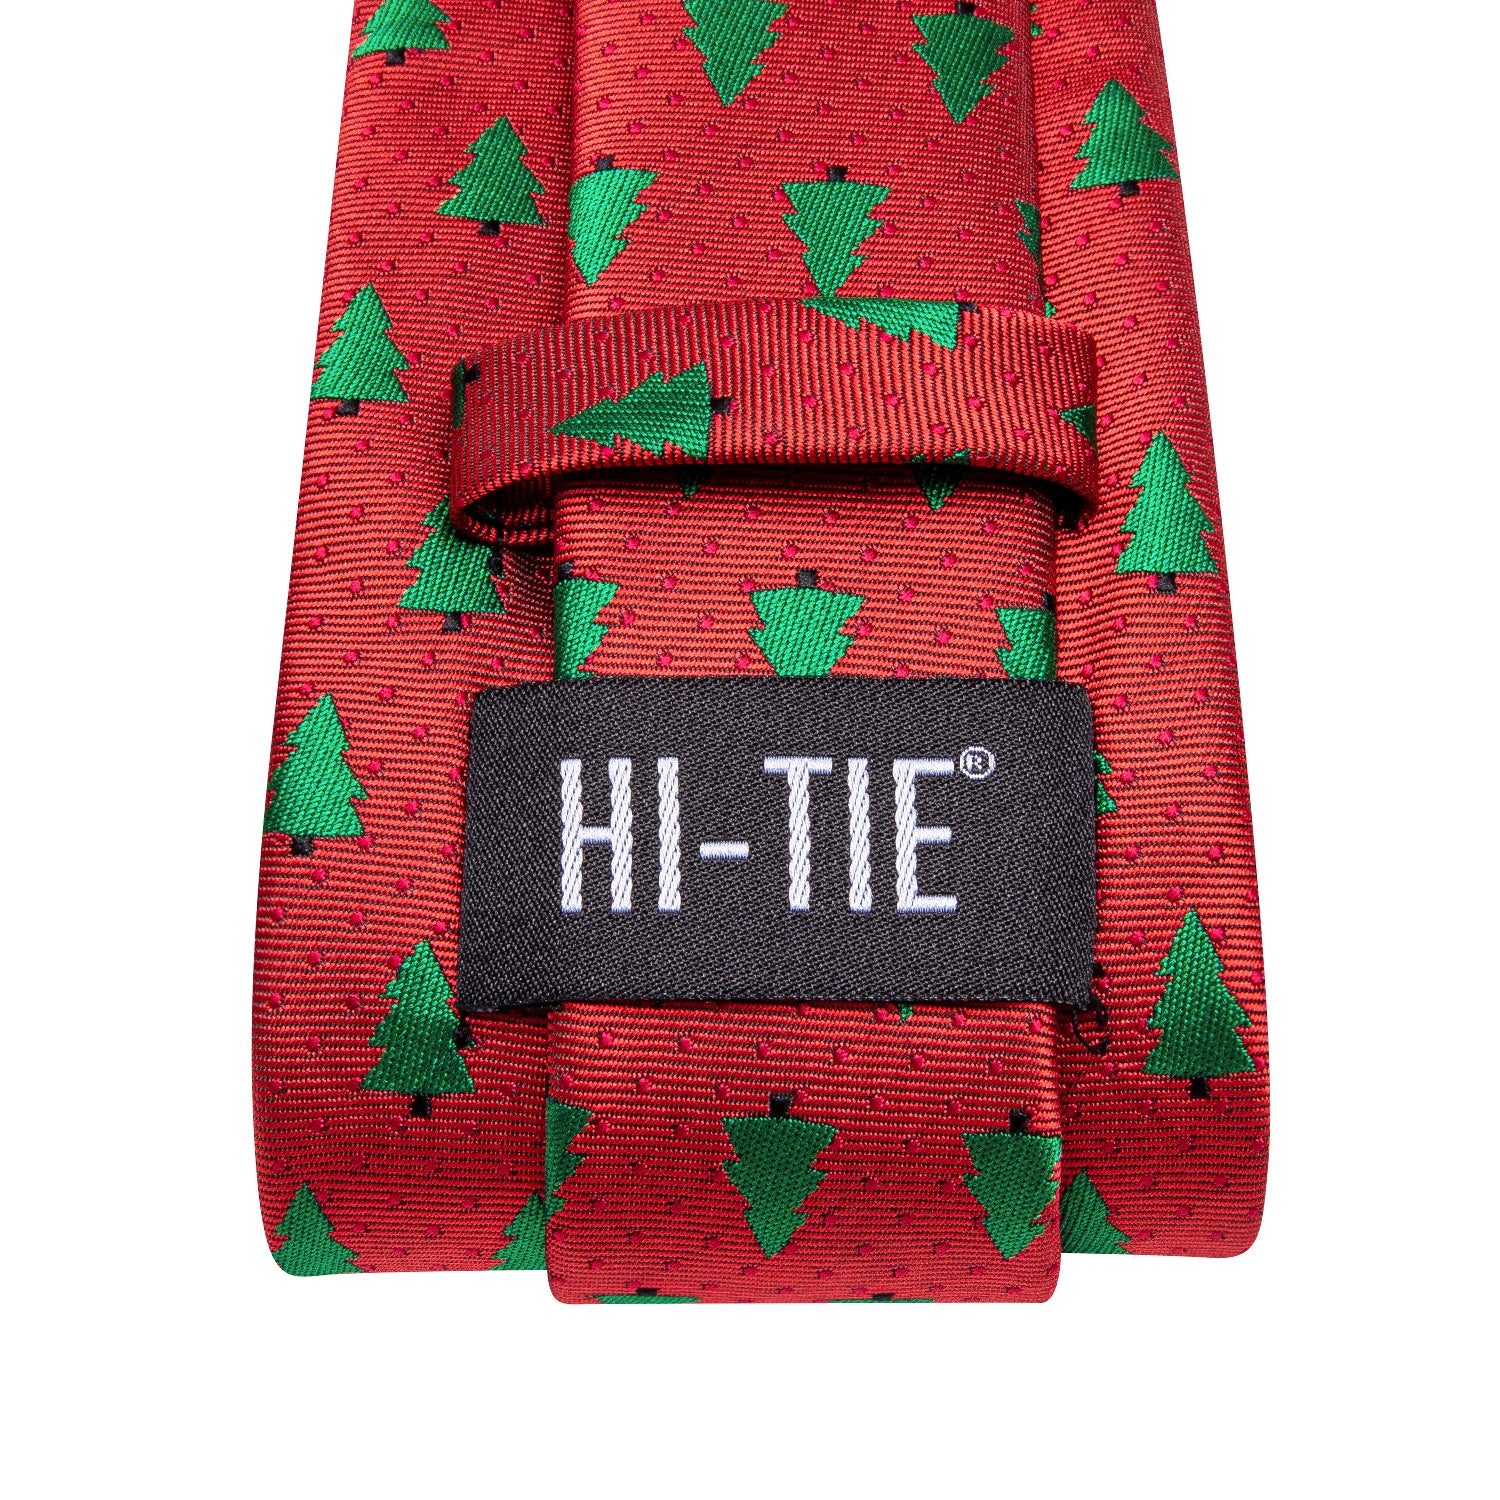 Red Green Pines Tie Pocket Square Cufflinks Set